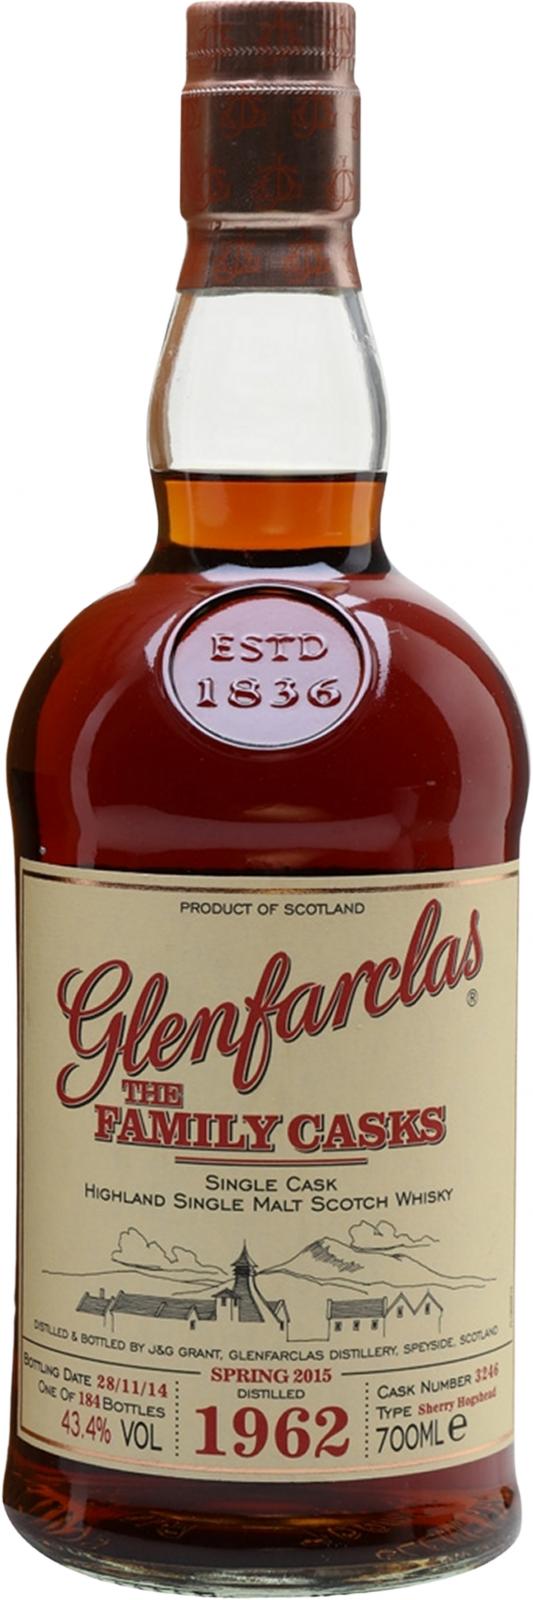 Glenfarclas 1962 The Family Casks Release Sp15 #3246 43.4% 700ml